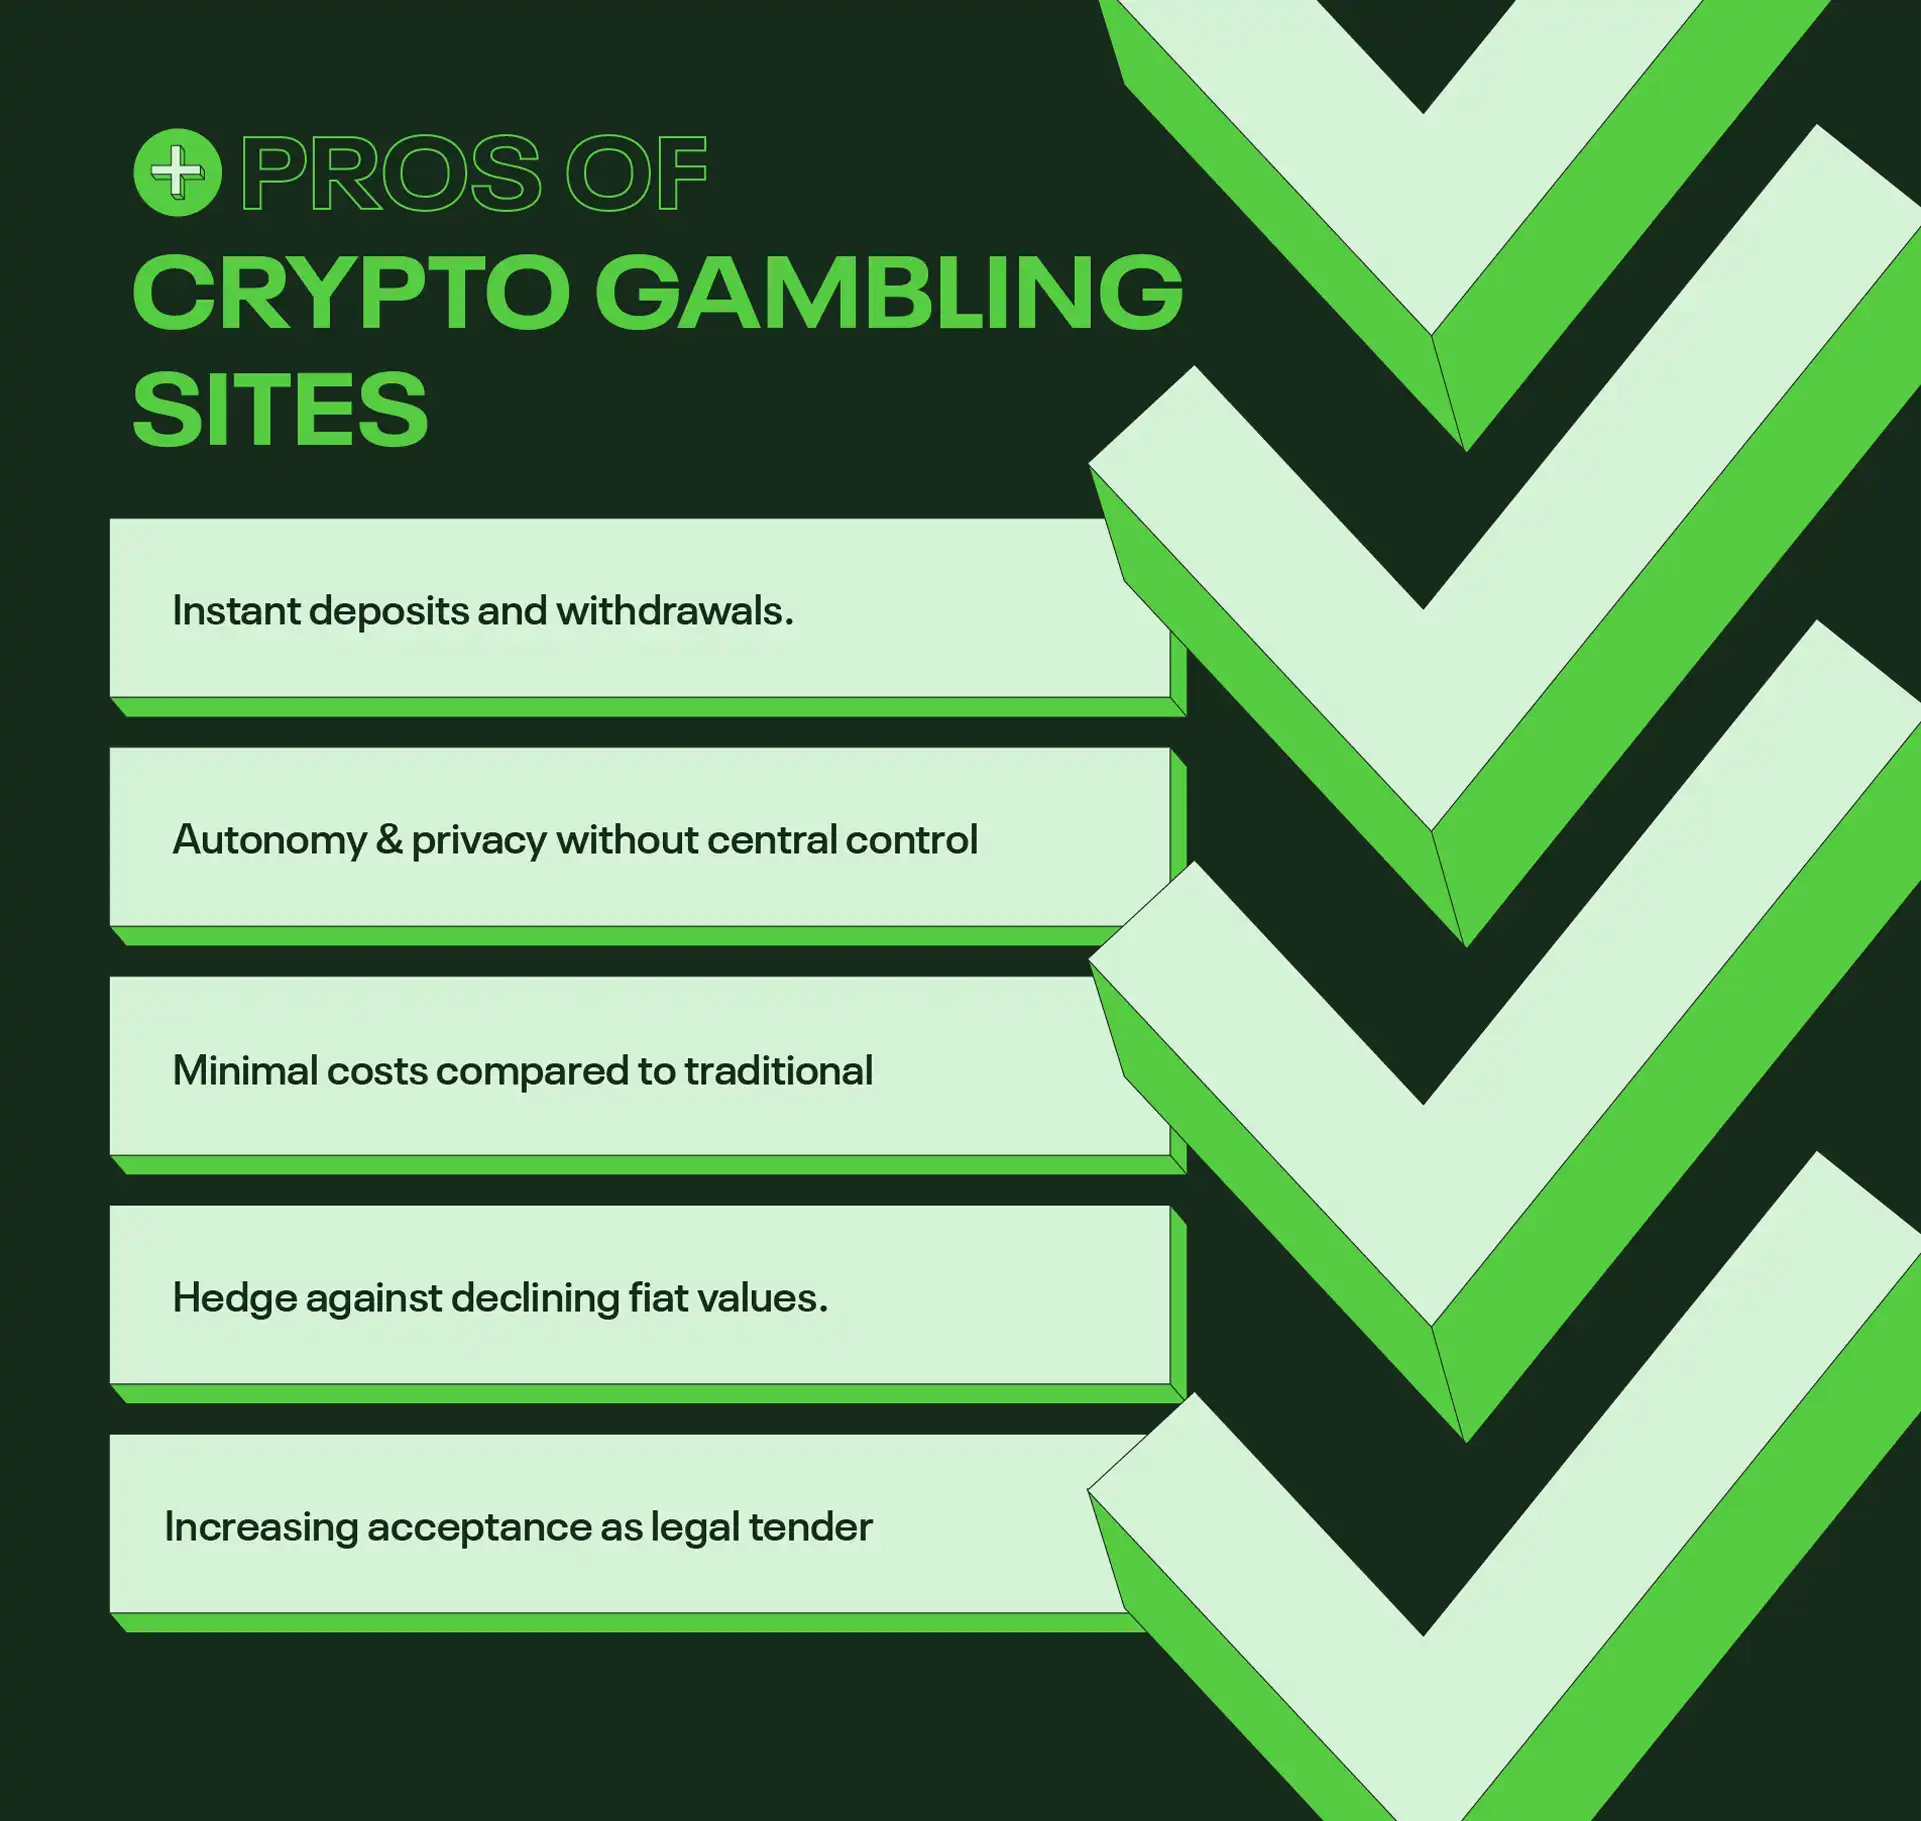 Pros of crypto gambling sites